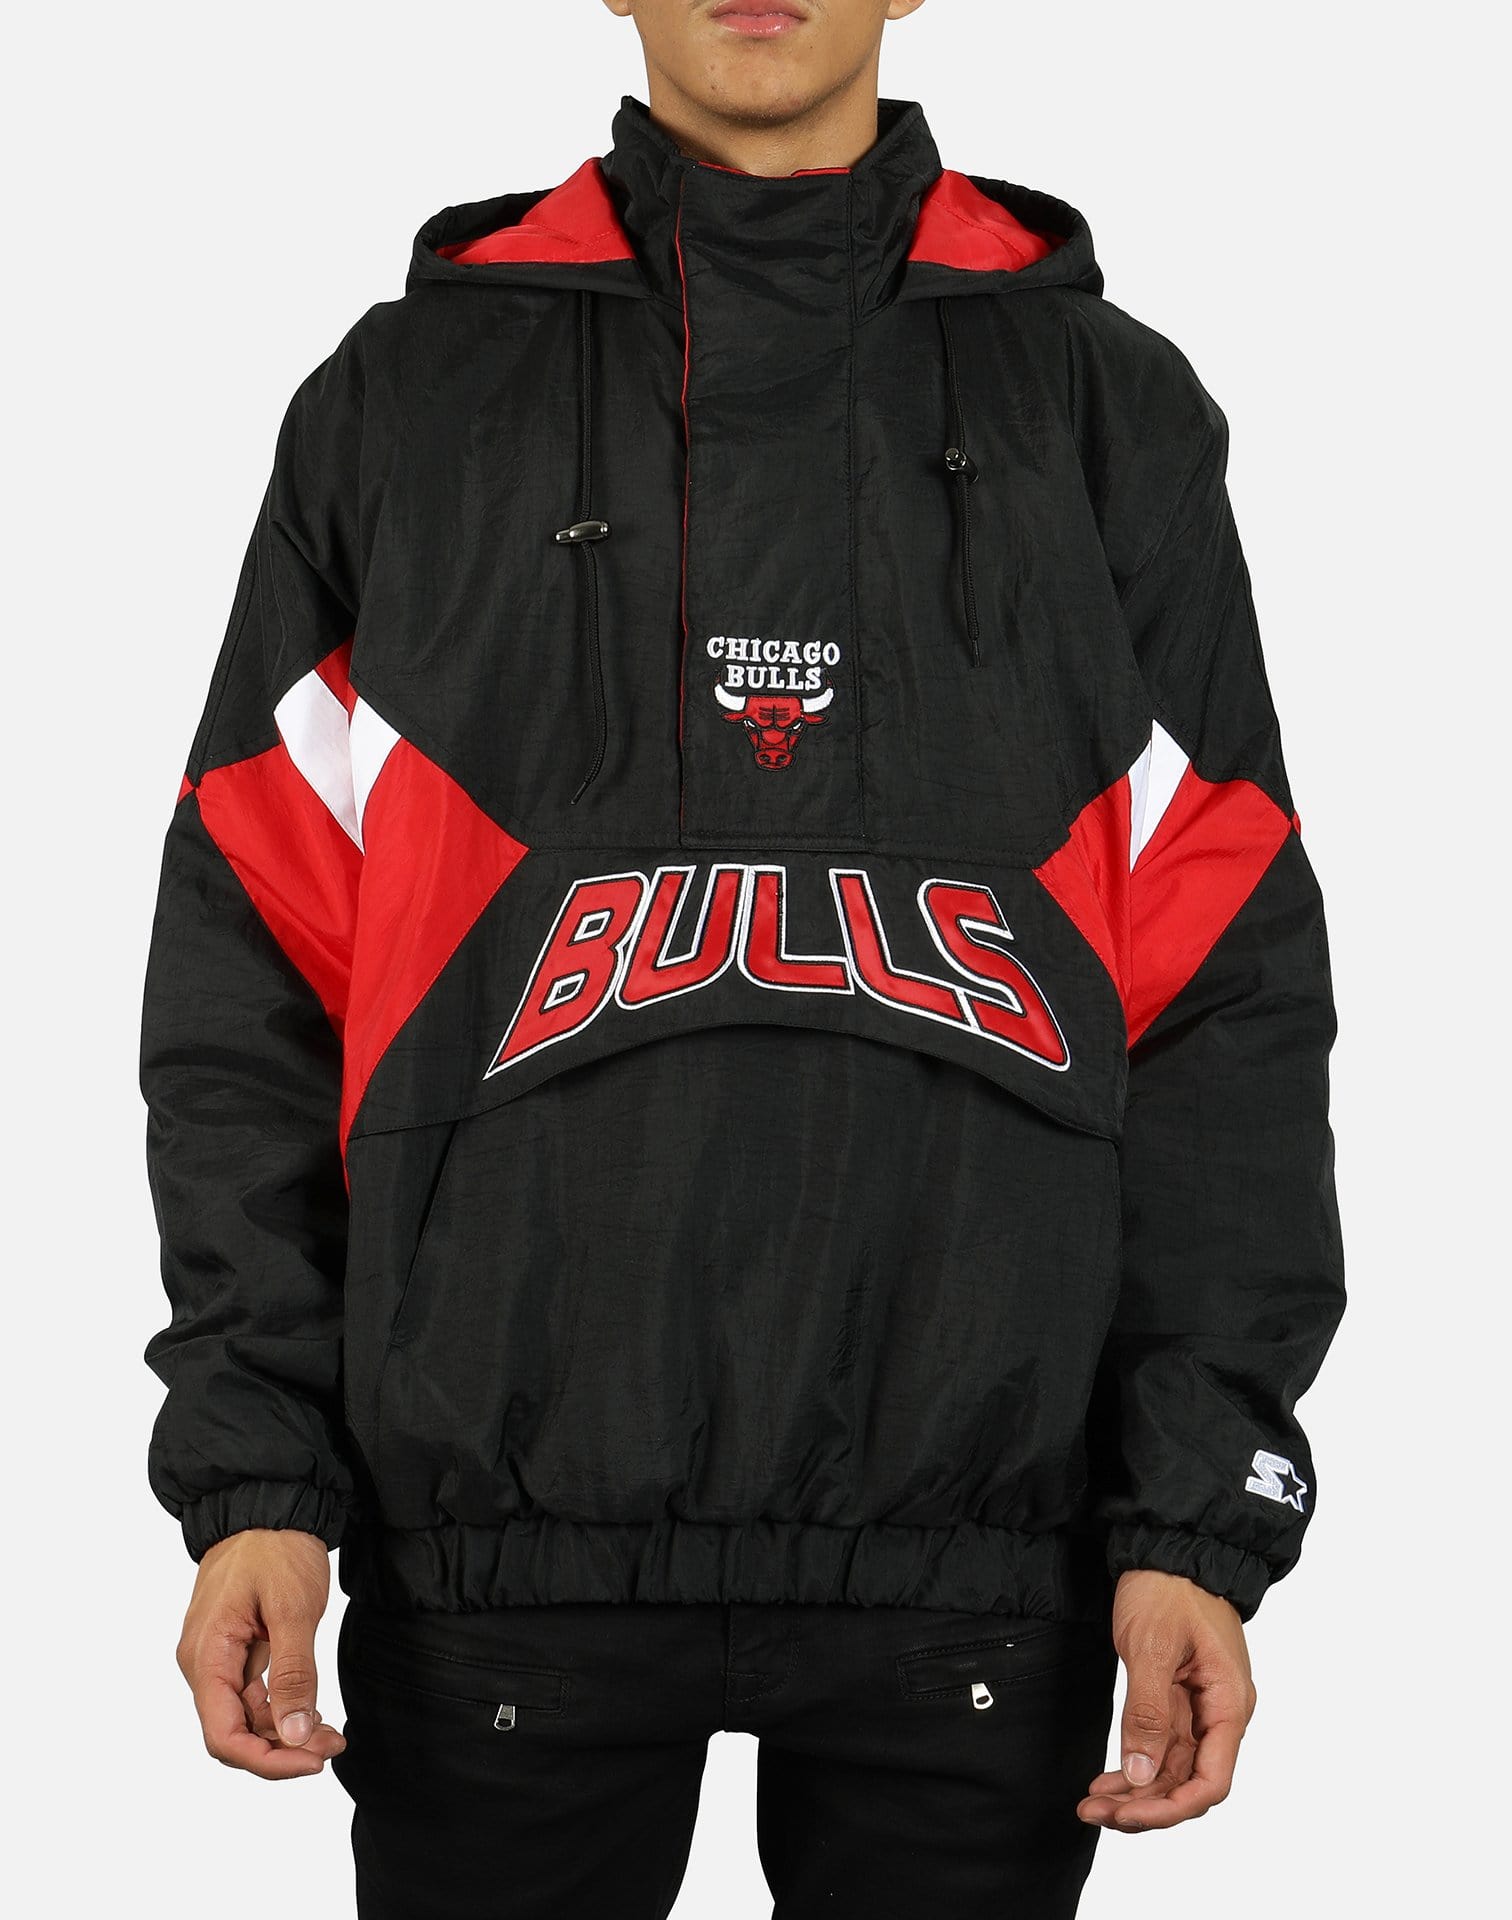 Chicago Bulls Starter Home Team Hoodie Half-Zip Jacket - Red